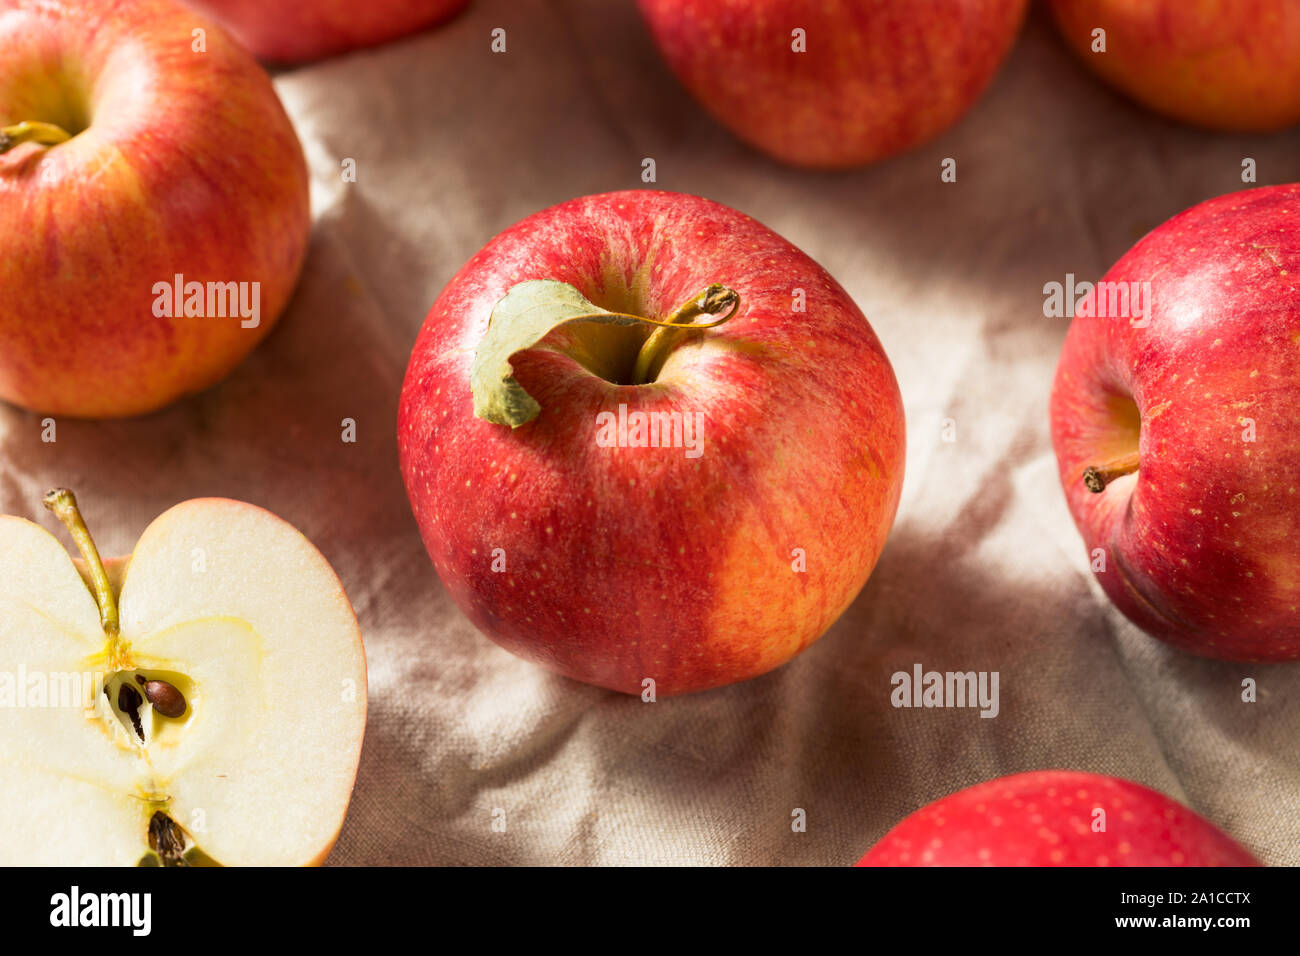 https://c8.alamy.com/comp/2A1CCTX/raw-red-organic-gala-apples-ready-to-eat-2A1CCTX.jpg